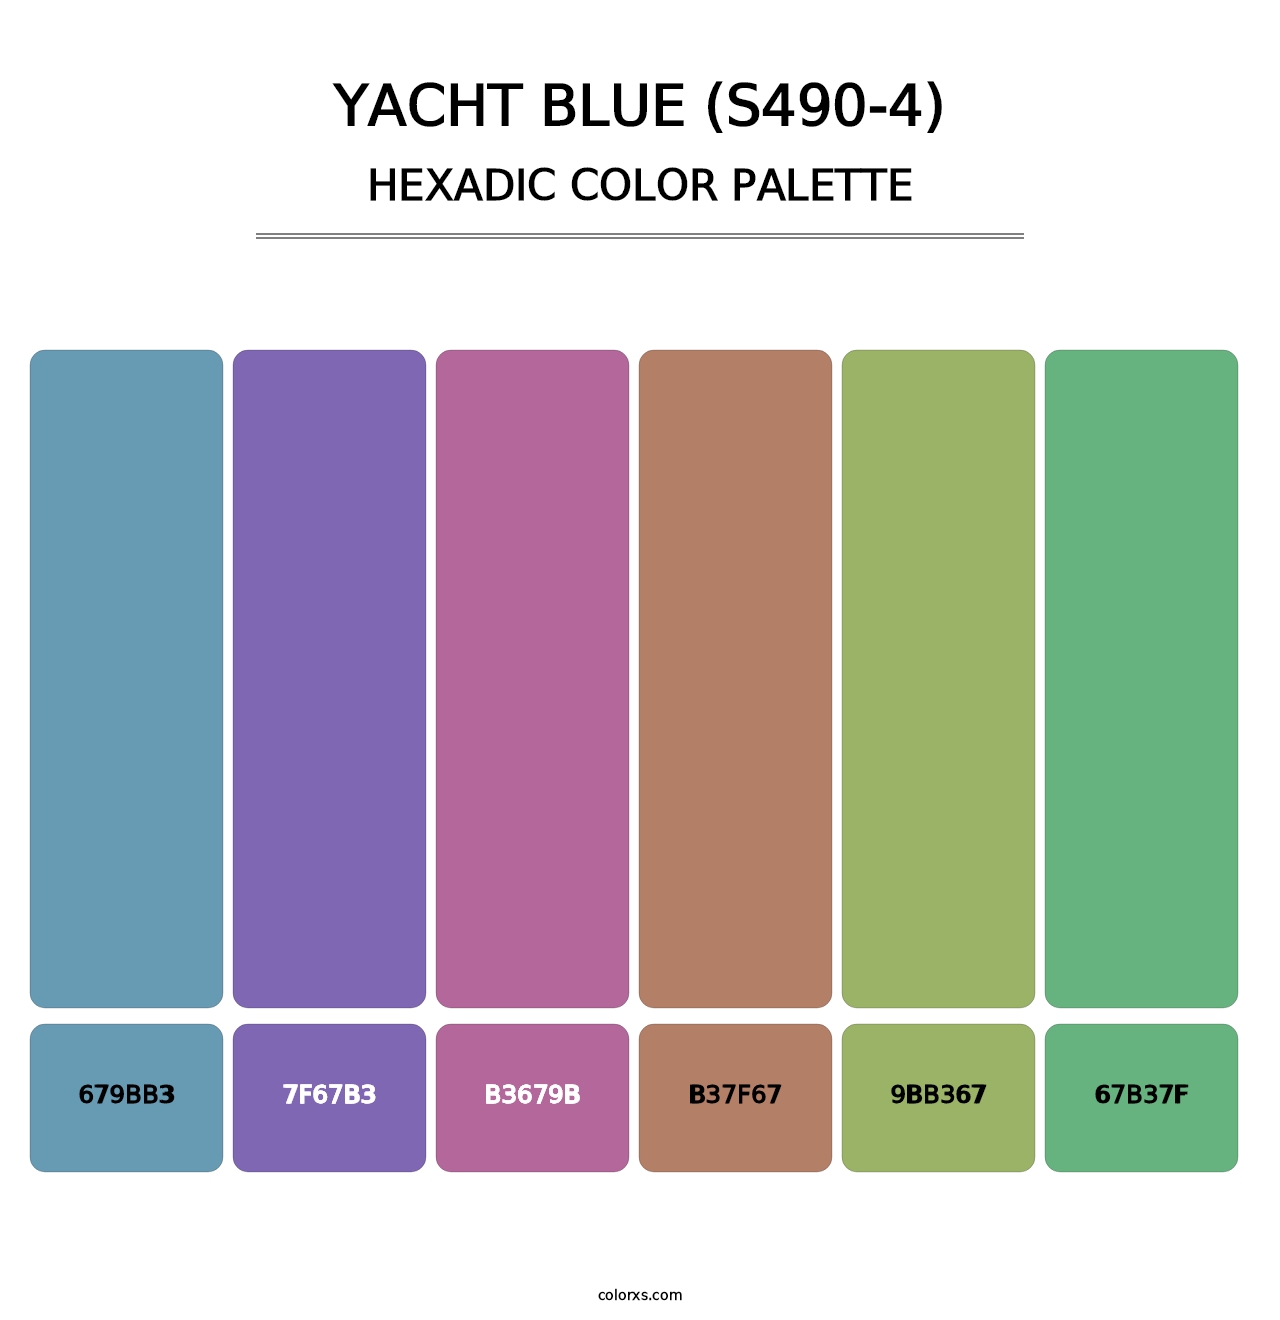 Yacht Blue (S490-4) - Hexadic Color Palette